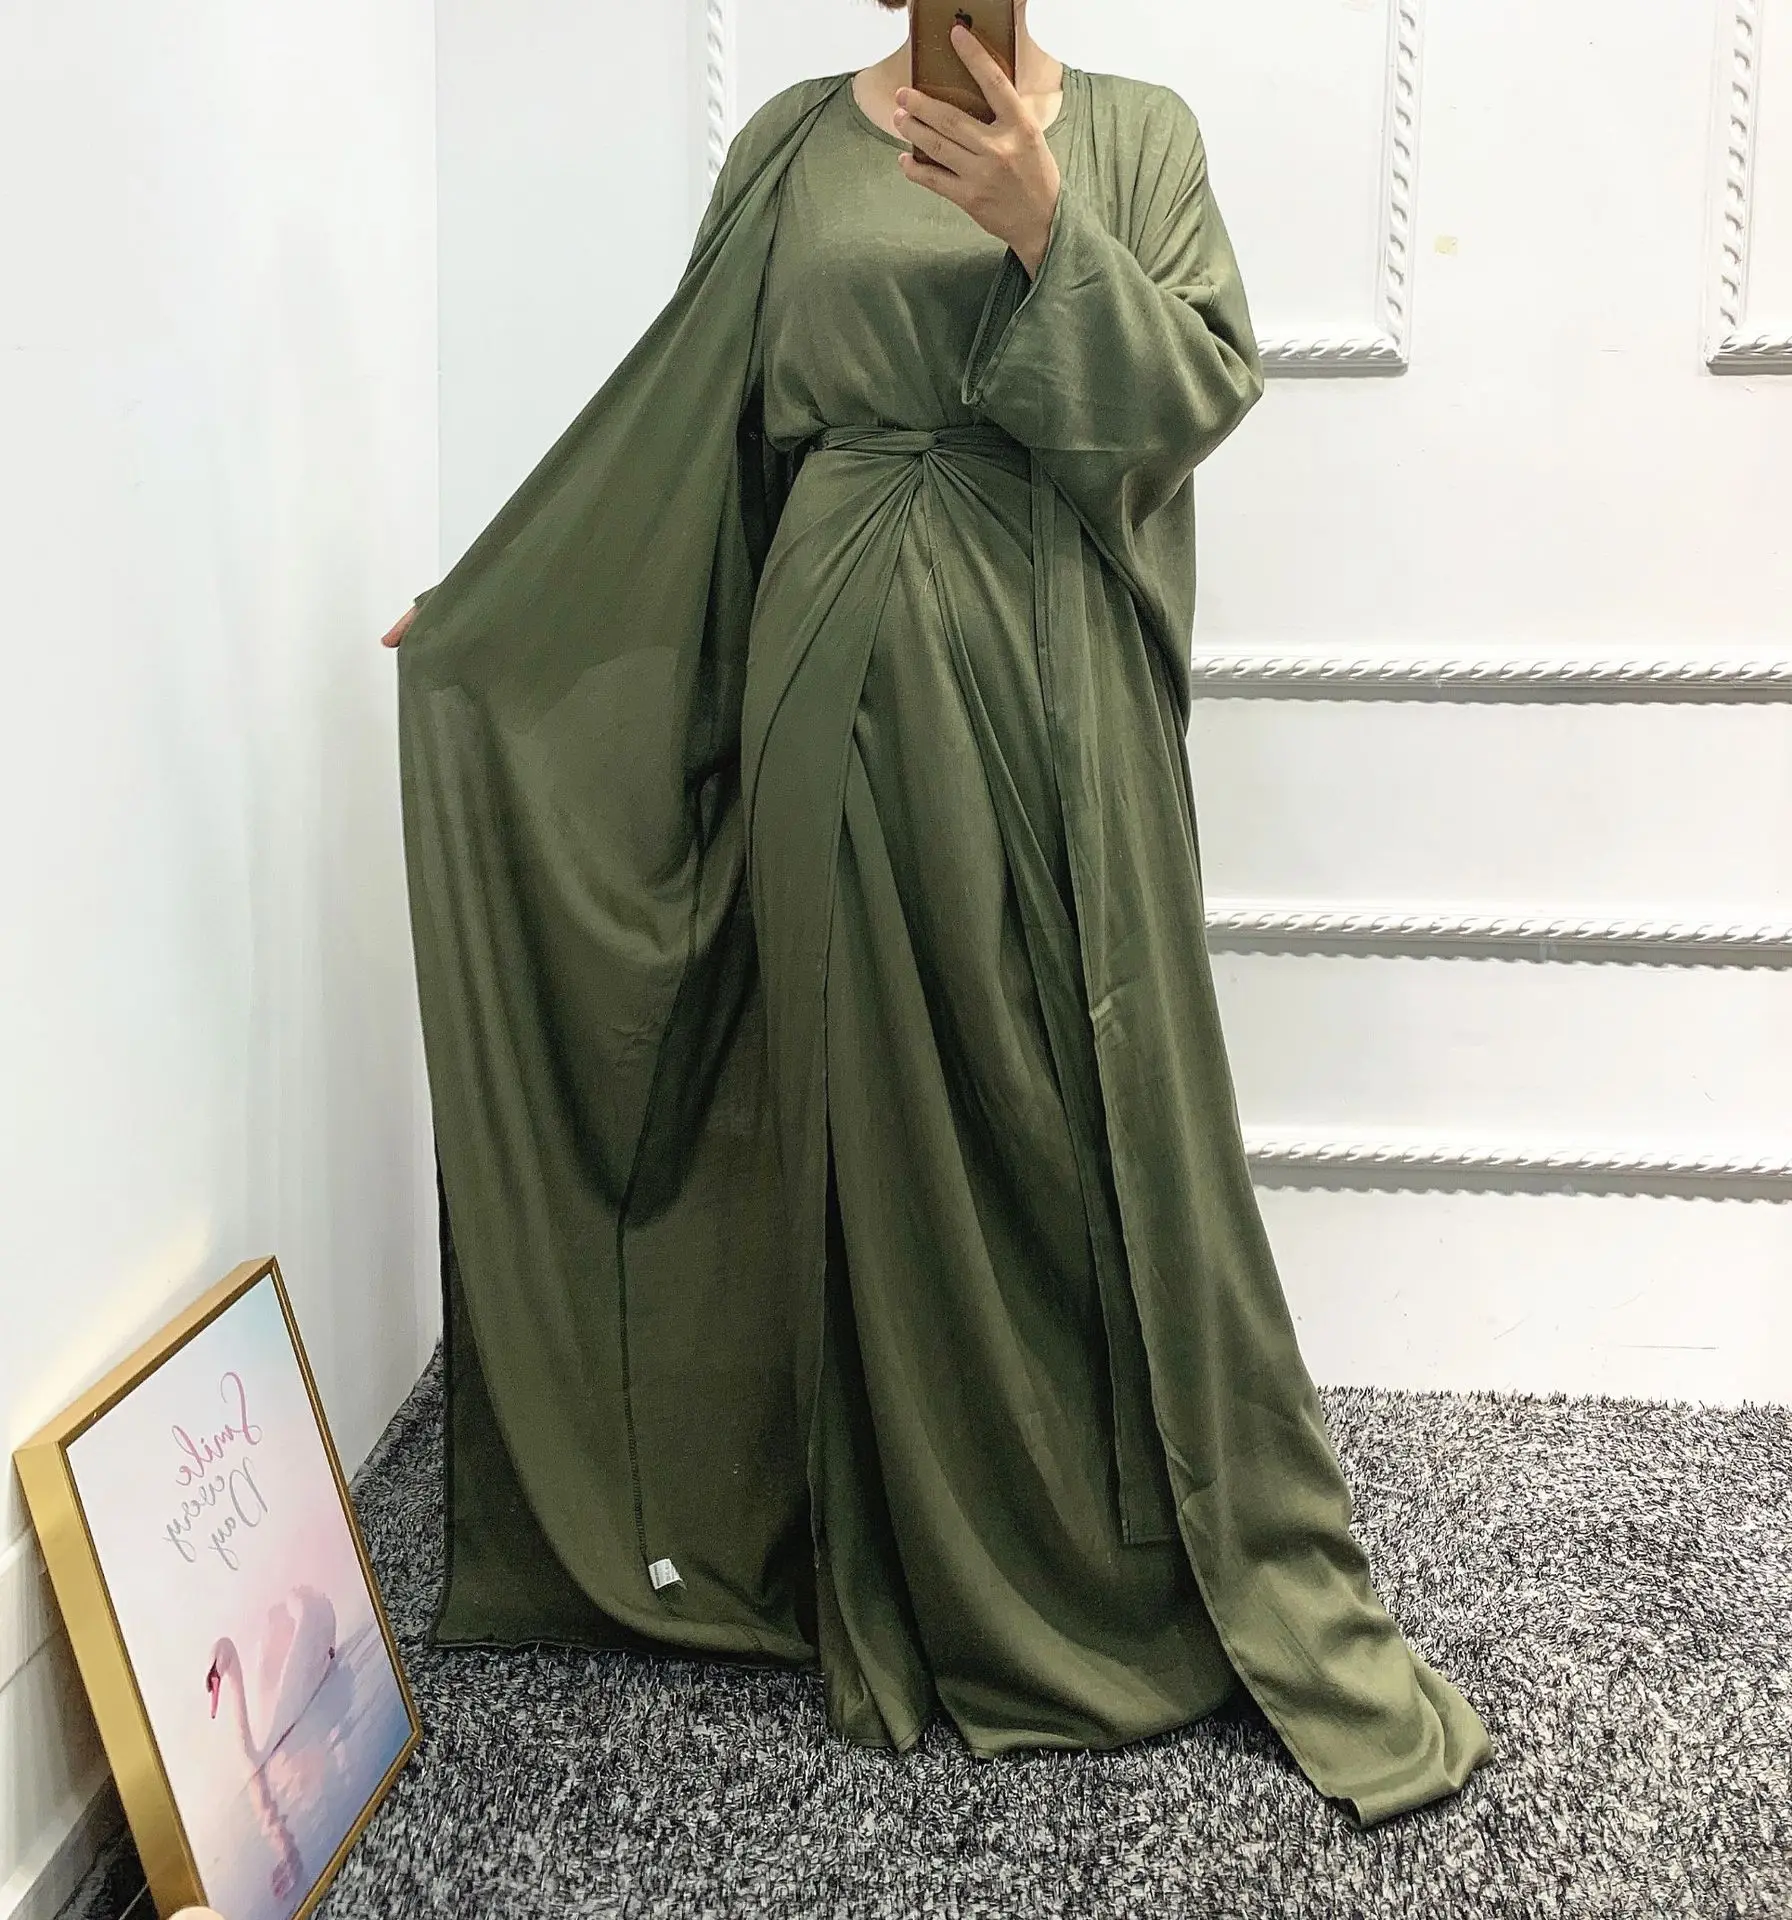 

New 3 pieces Abaya Sets Muslim Women Plain Modest Dress Kimono Open Cardigan Islamic Clothing, 4 colors in stock